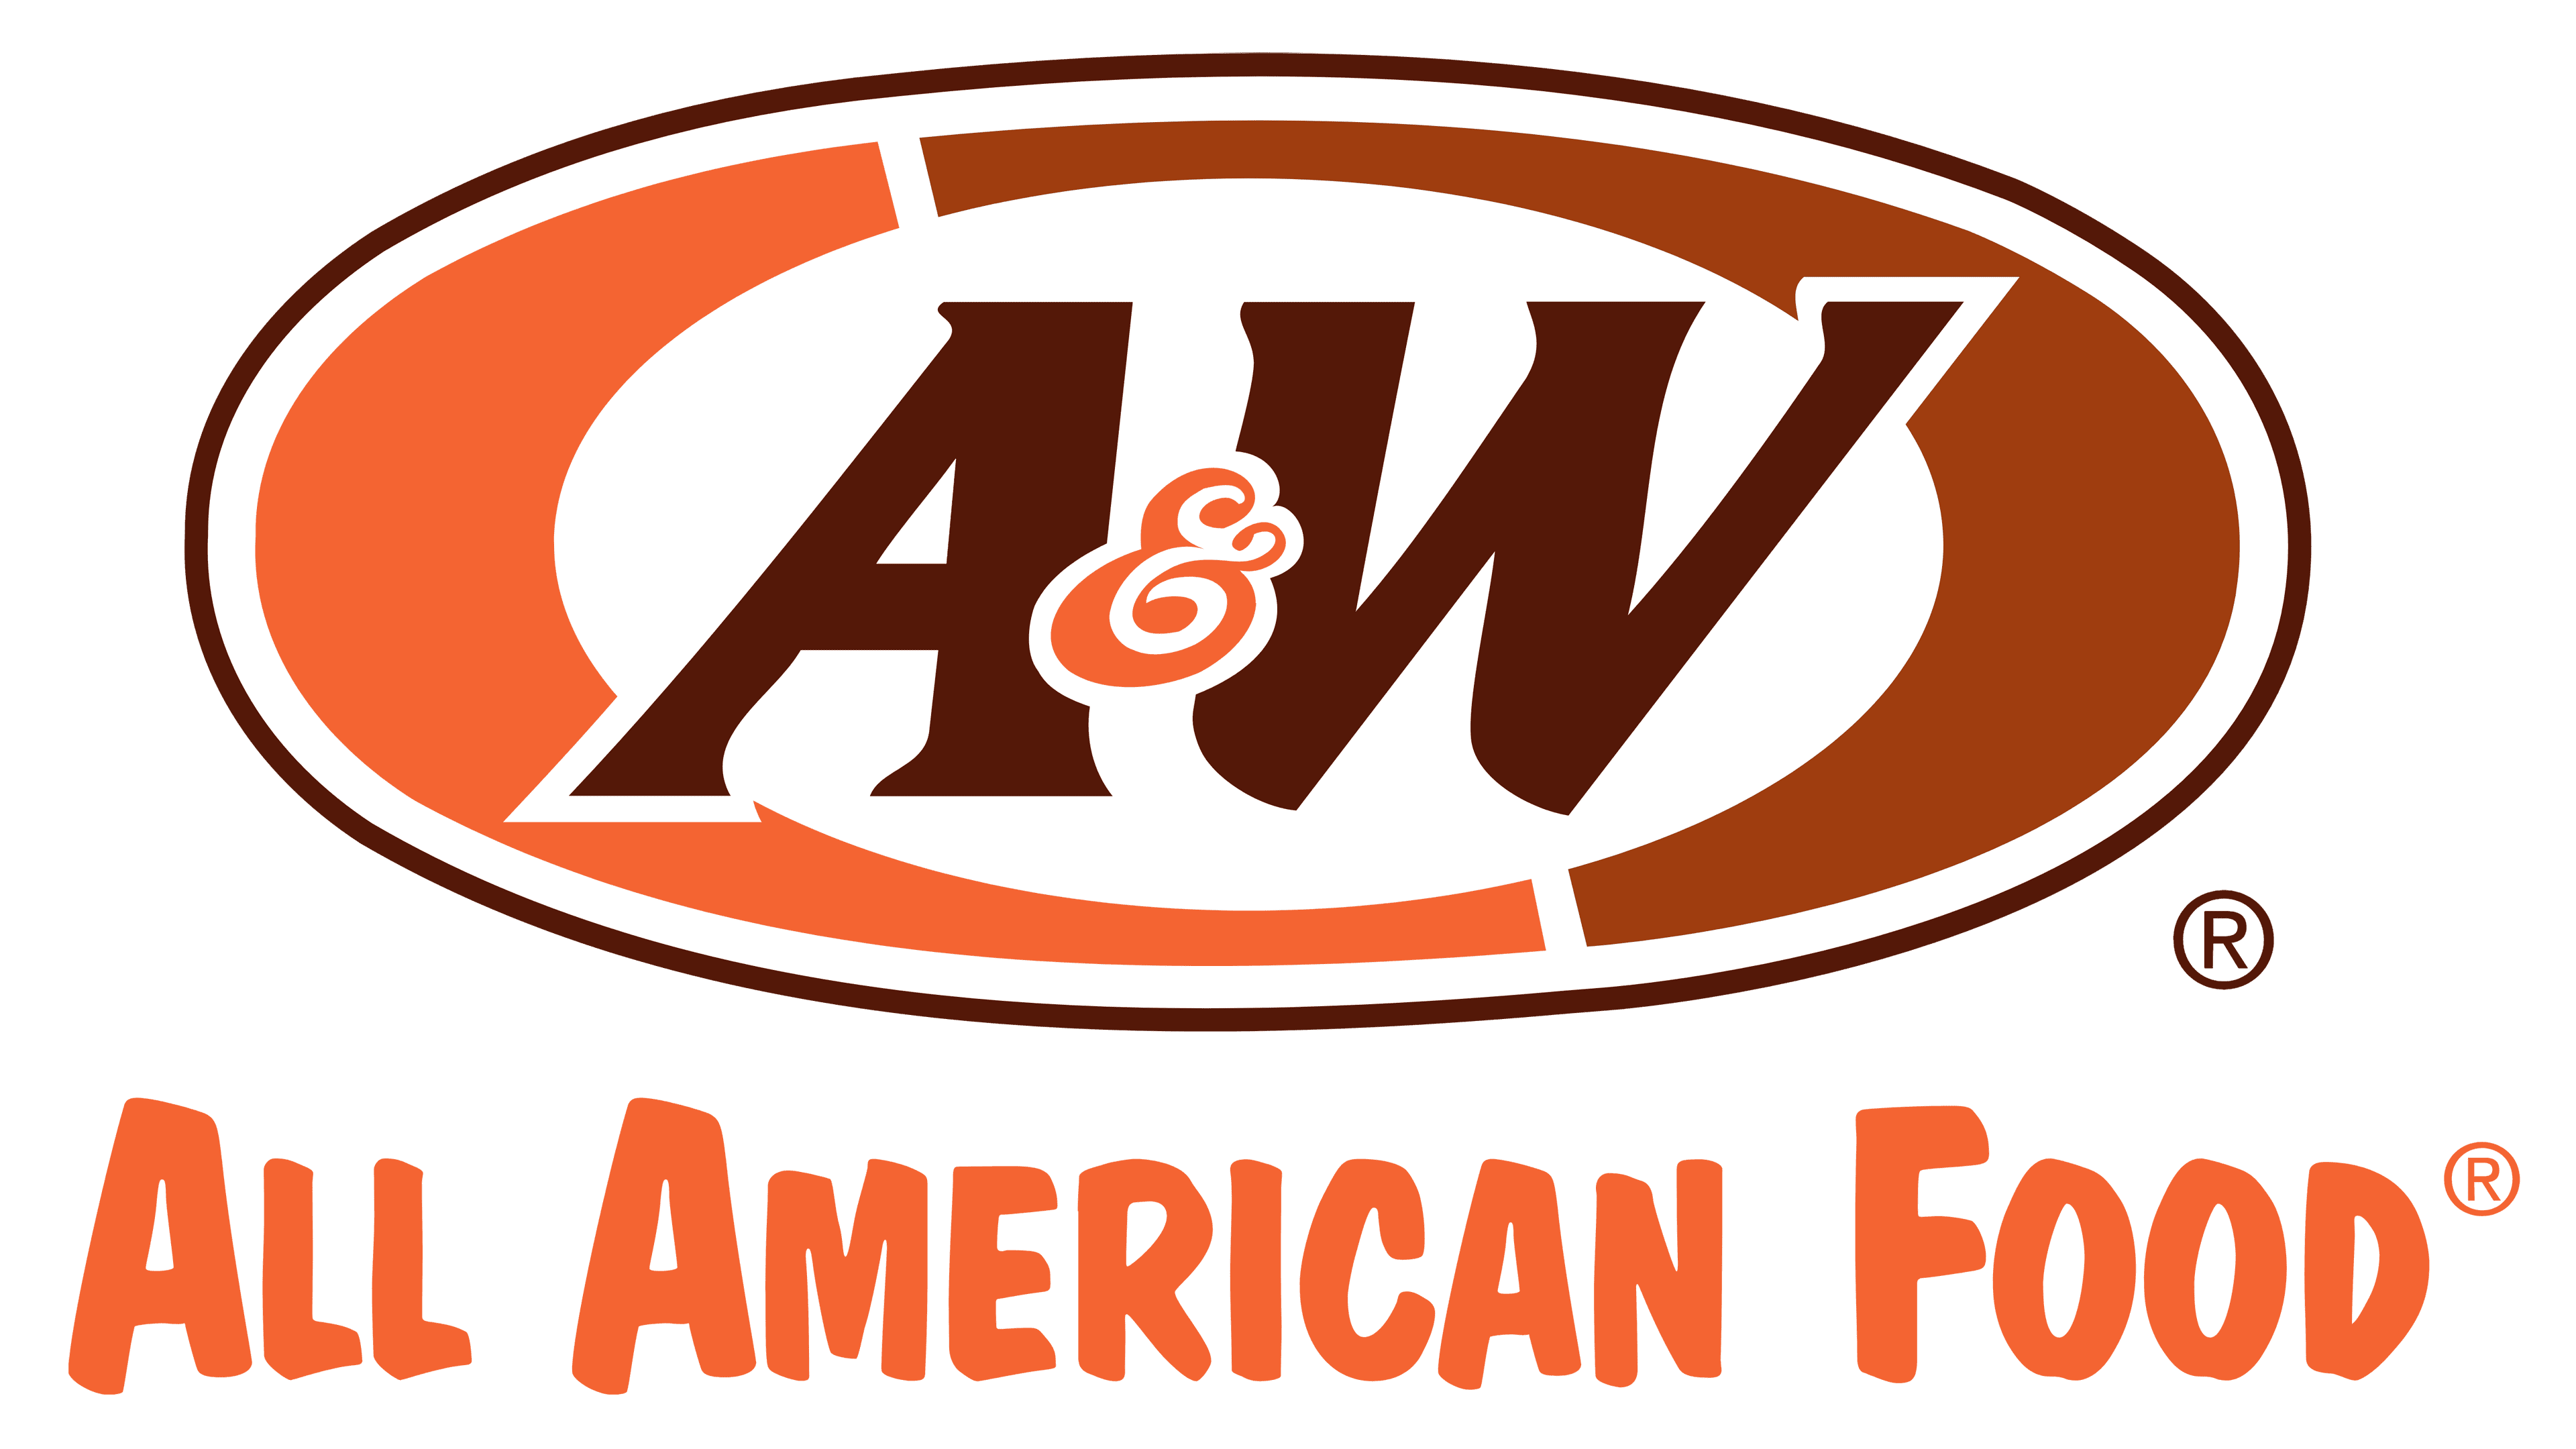 fast food logo